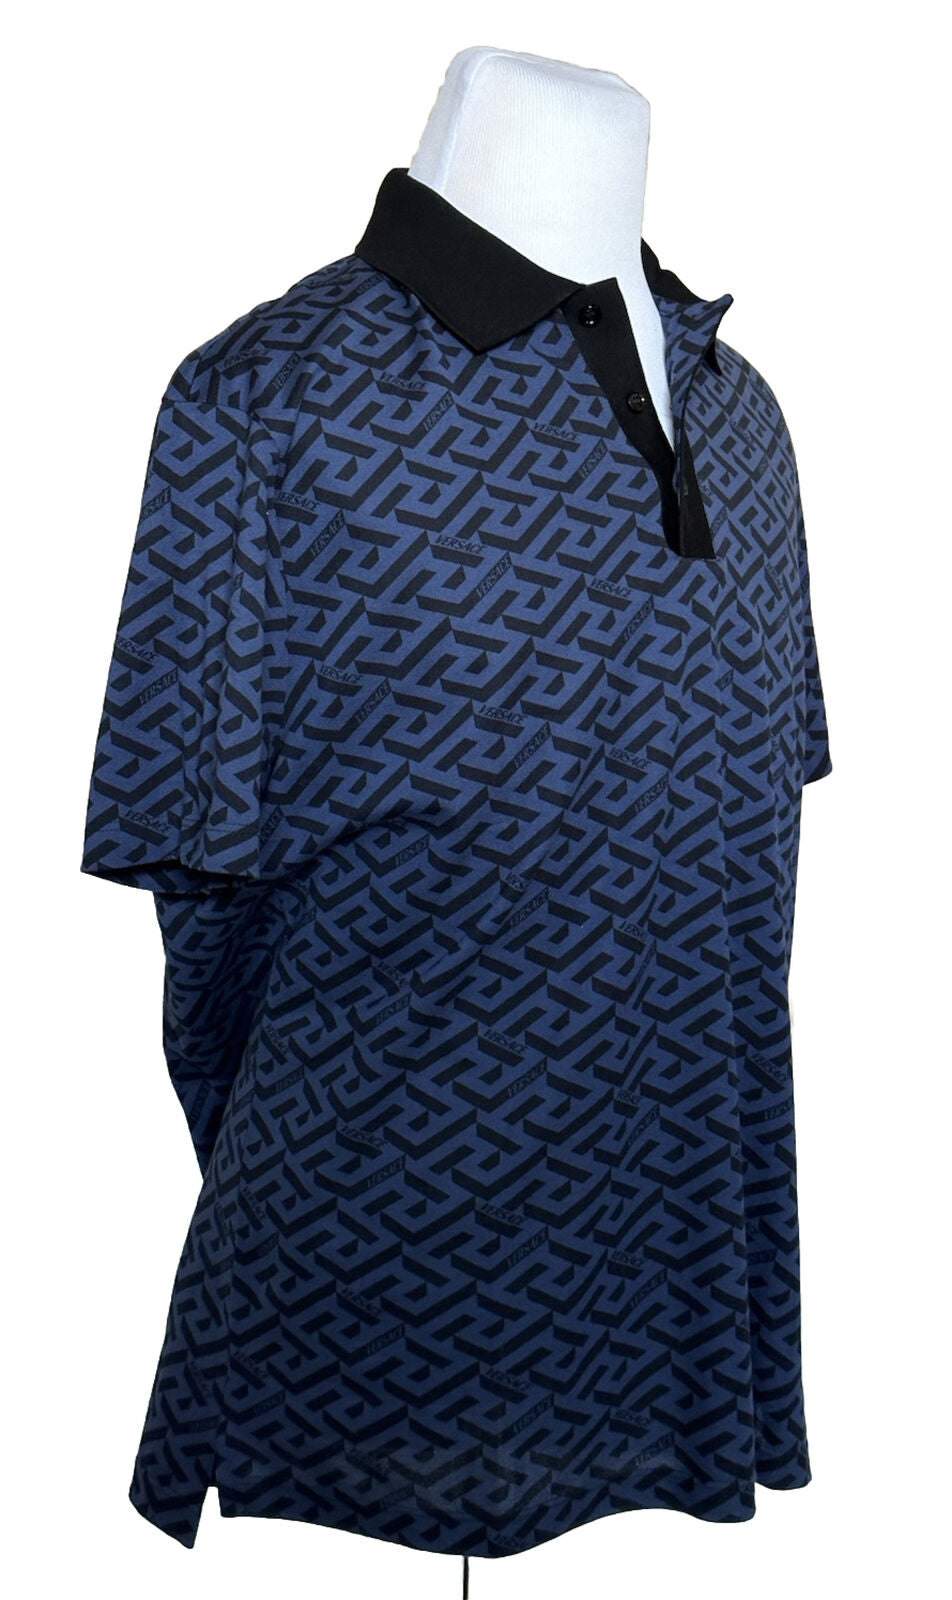 NWT $775 Versace Piquet Greca Signature Blue/Black Polo Shirt 2XL 1004083 Italy